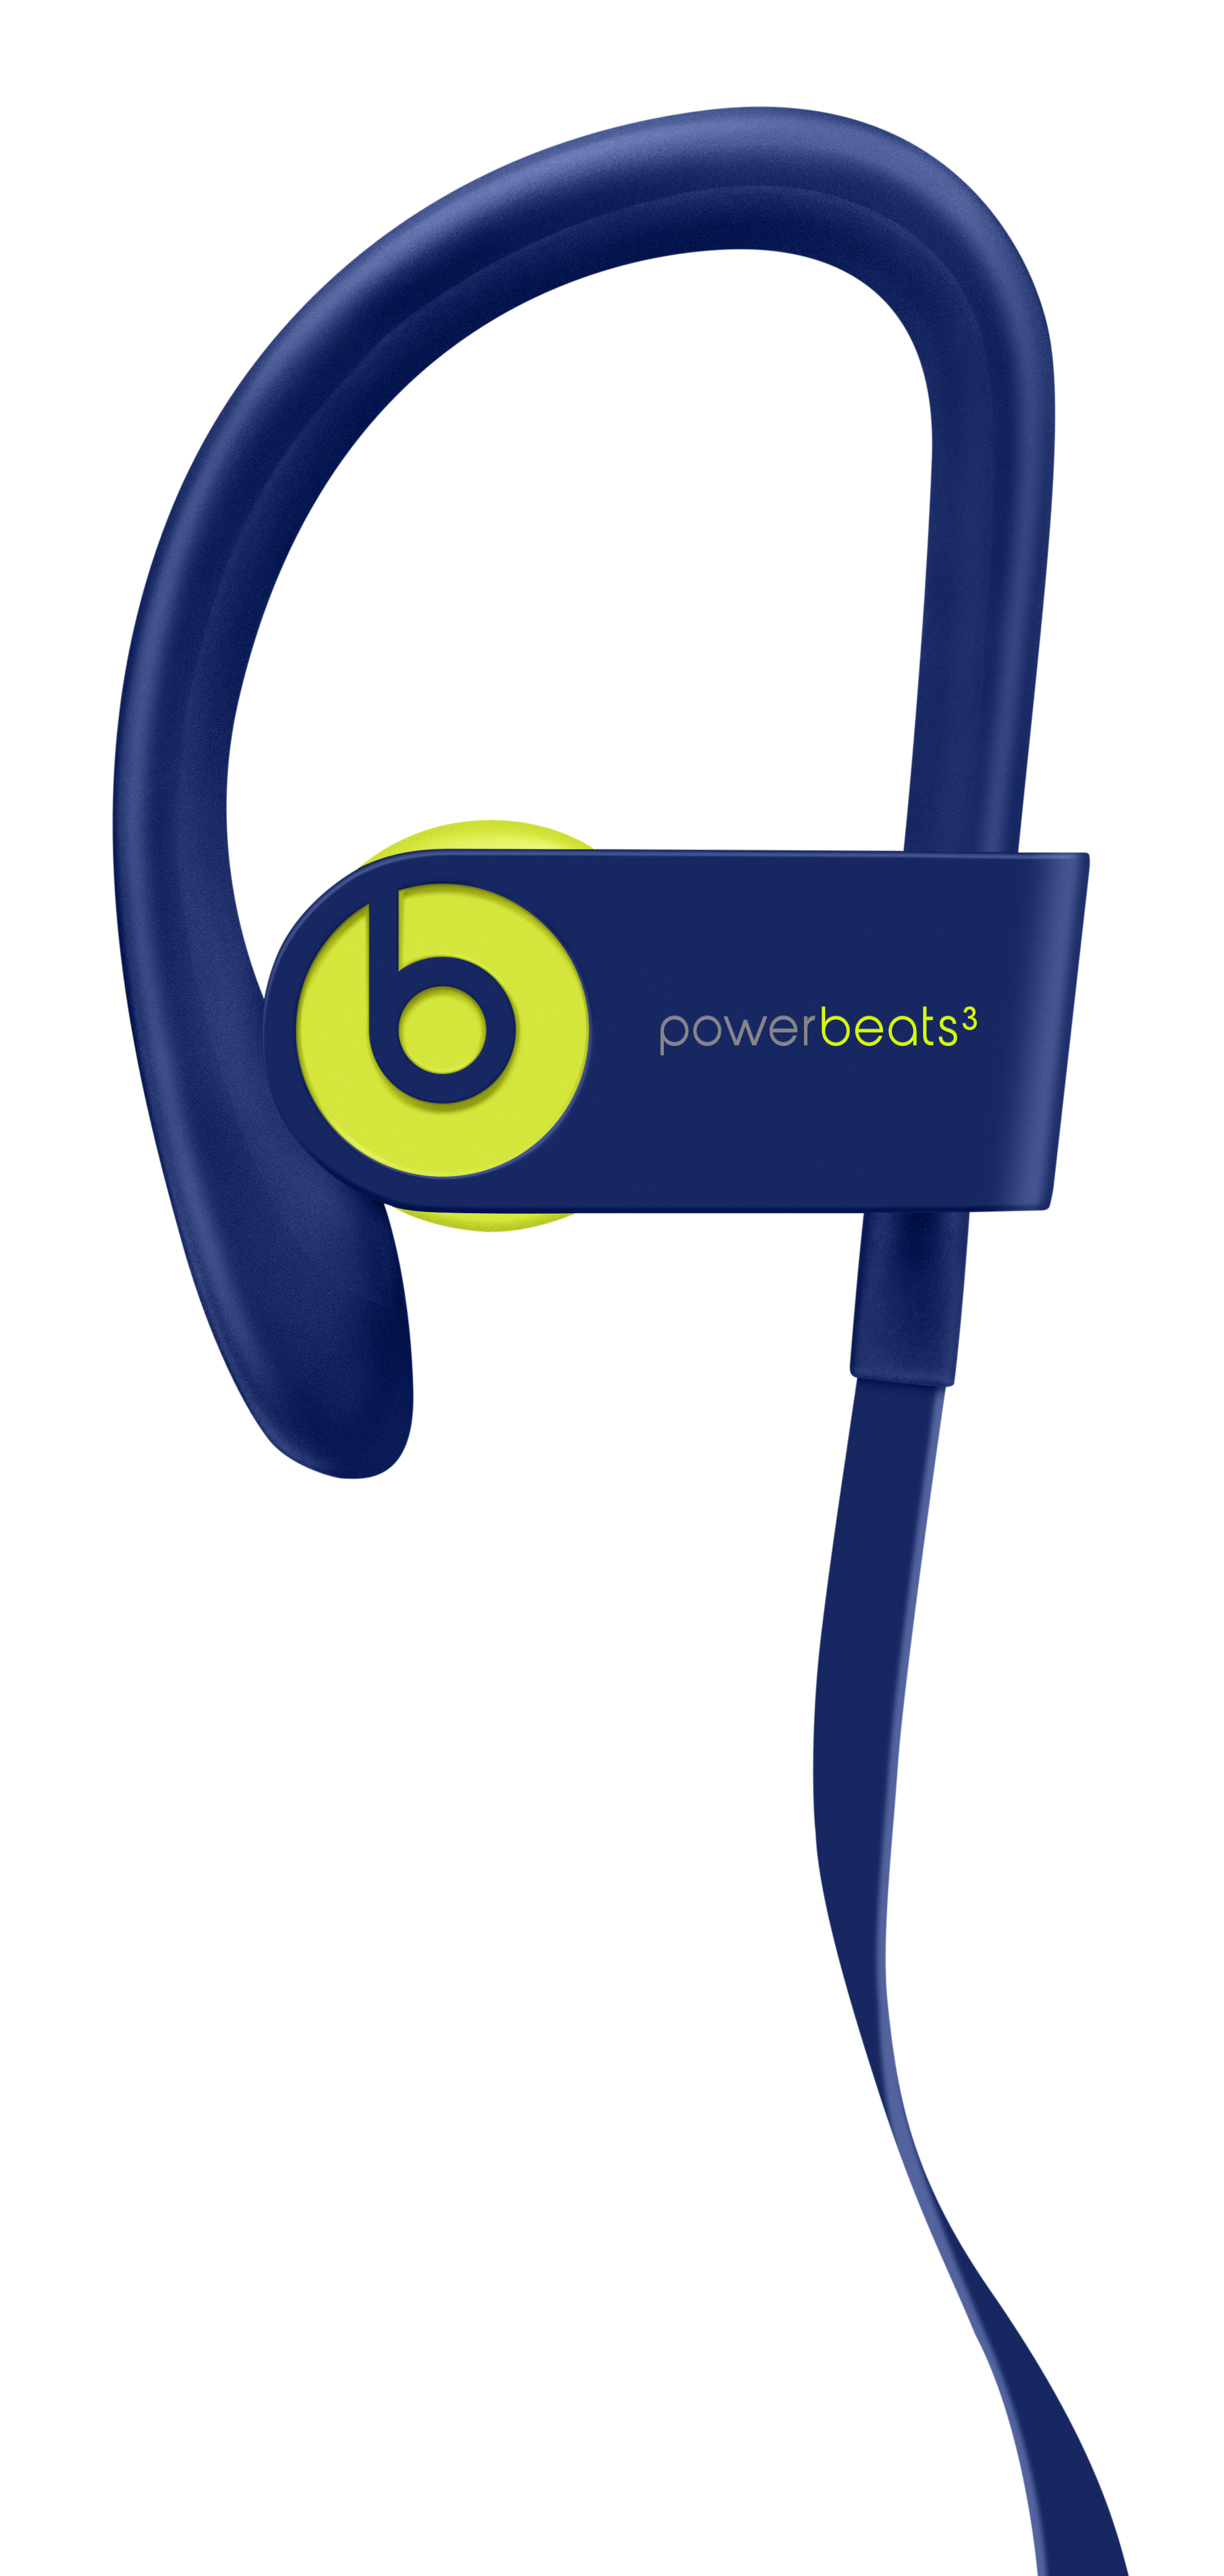 Restored Beats by Dr. Dre Powerbeats3 Bluetooth Sports In-Ear Headphones, Pop Indigo, MREQ2LL/A (Refurbished) - image 2 of 2